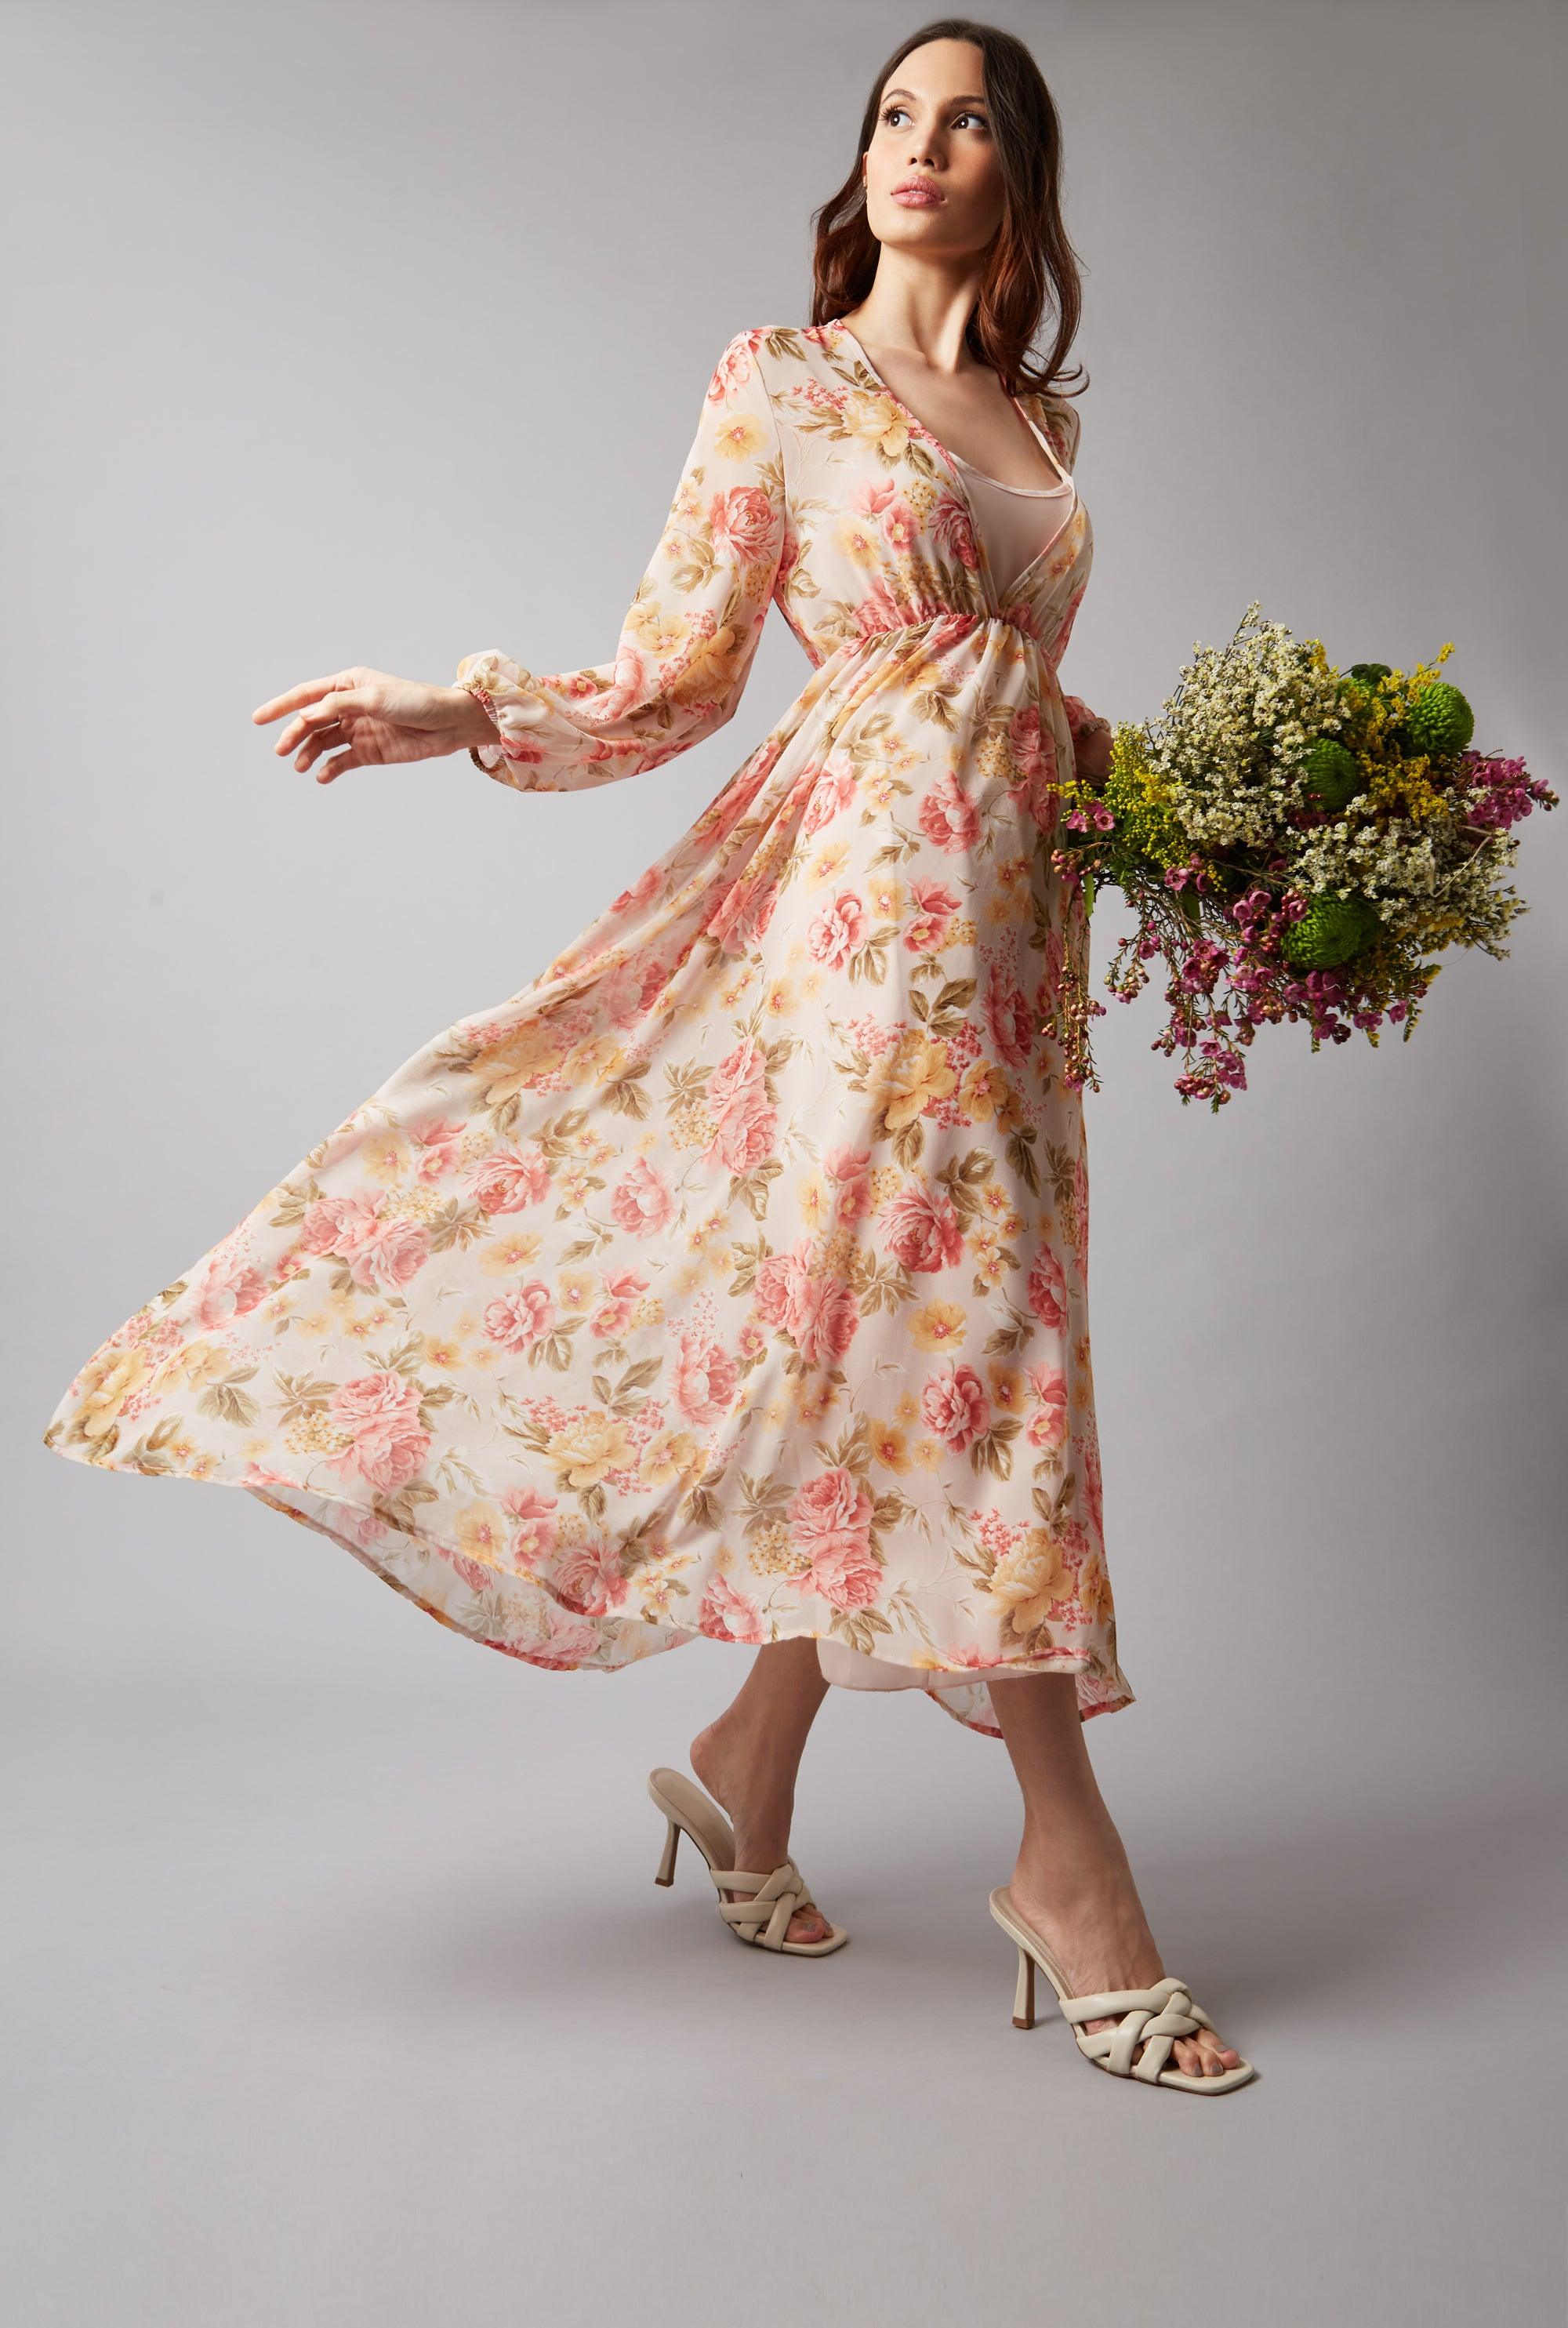 Chiffon Long Frocks Designs Chiffon Maxi Dress Floral Chiffon Maxi Dress Chiffon  Floral Maxi Dres